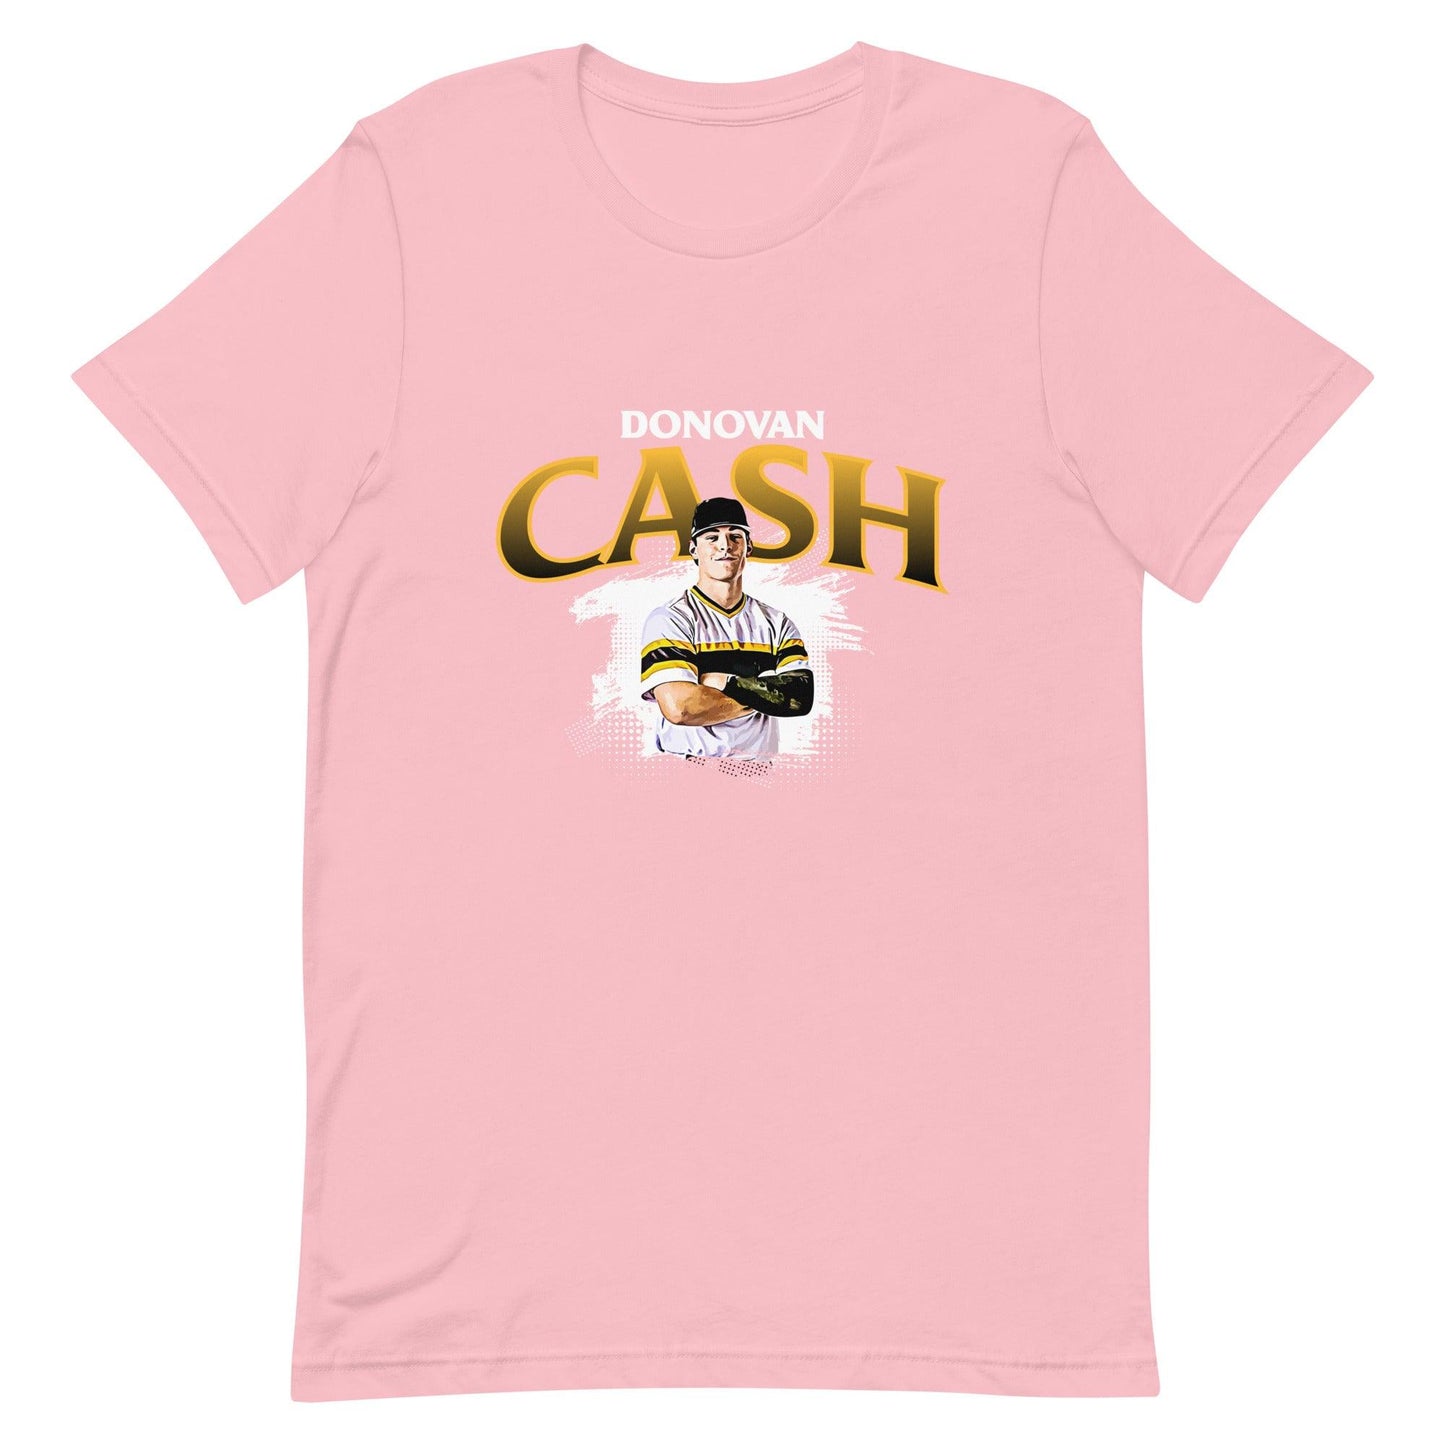 Donovan Cash "Stay Ready" t-shirt - Fan Arch